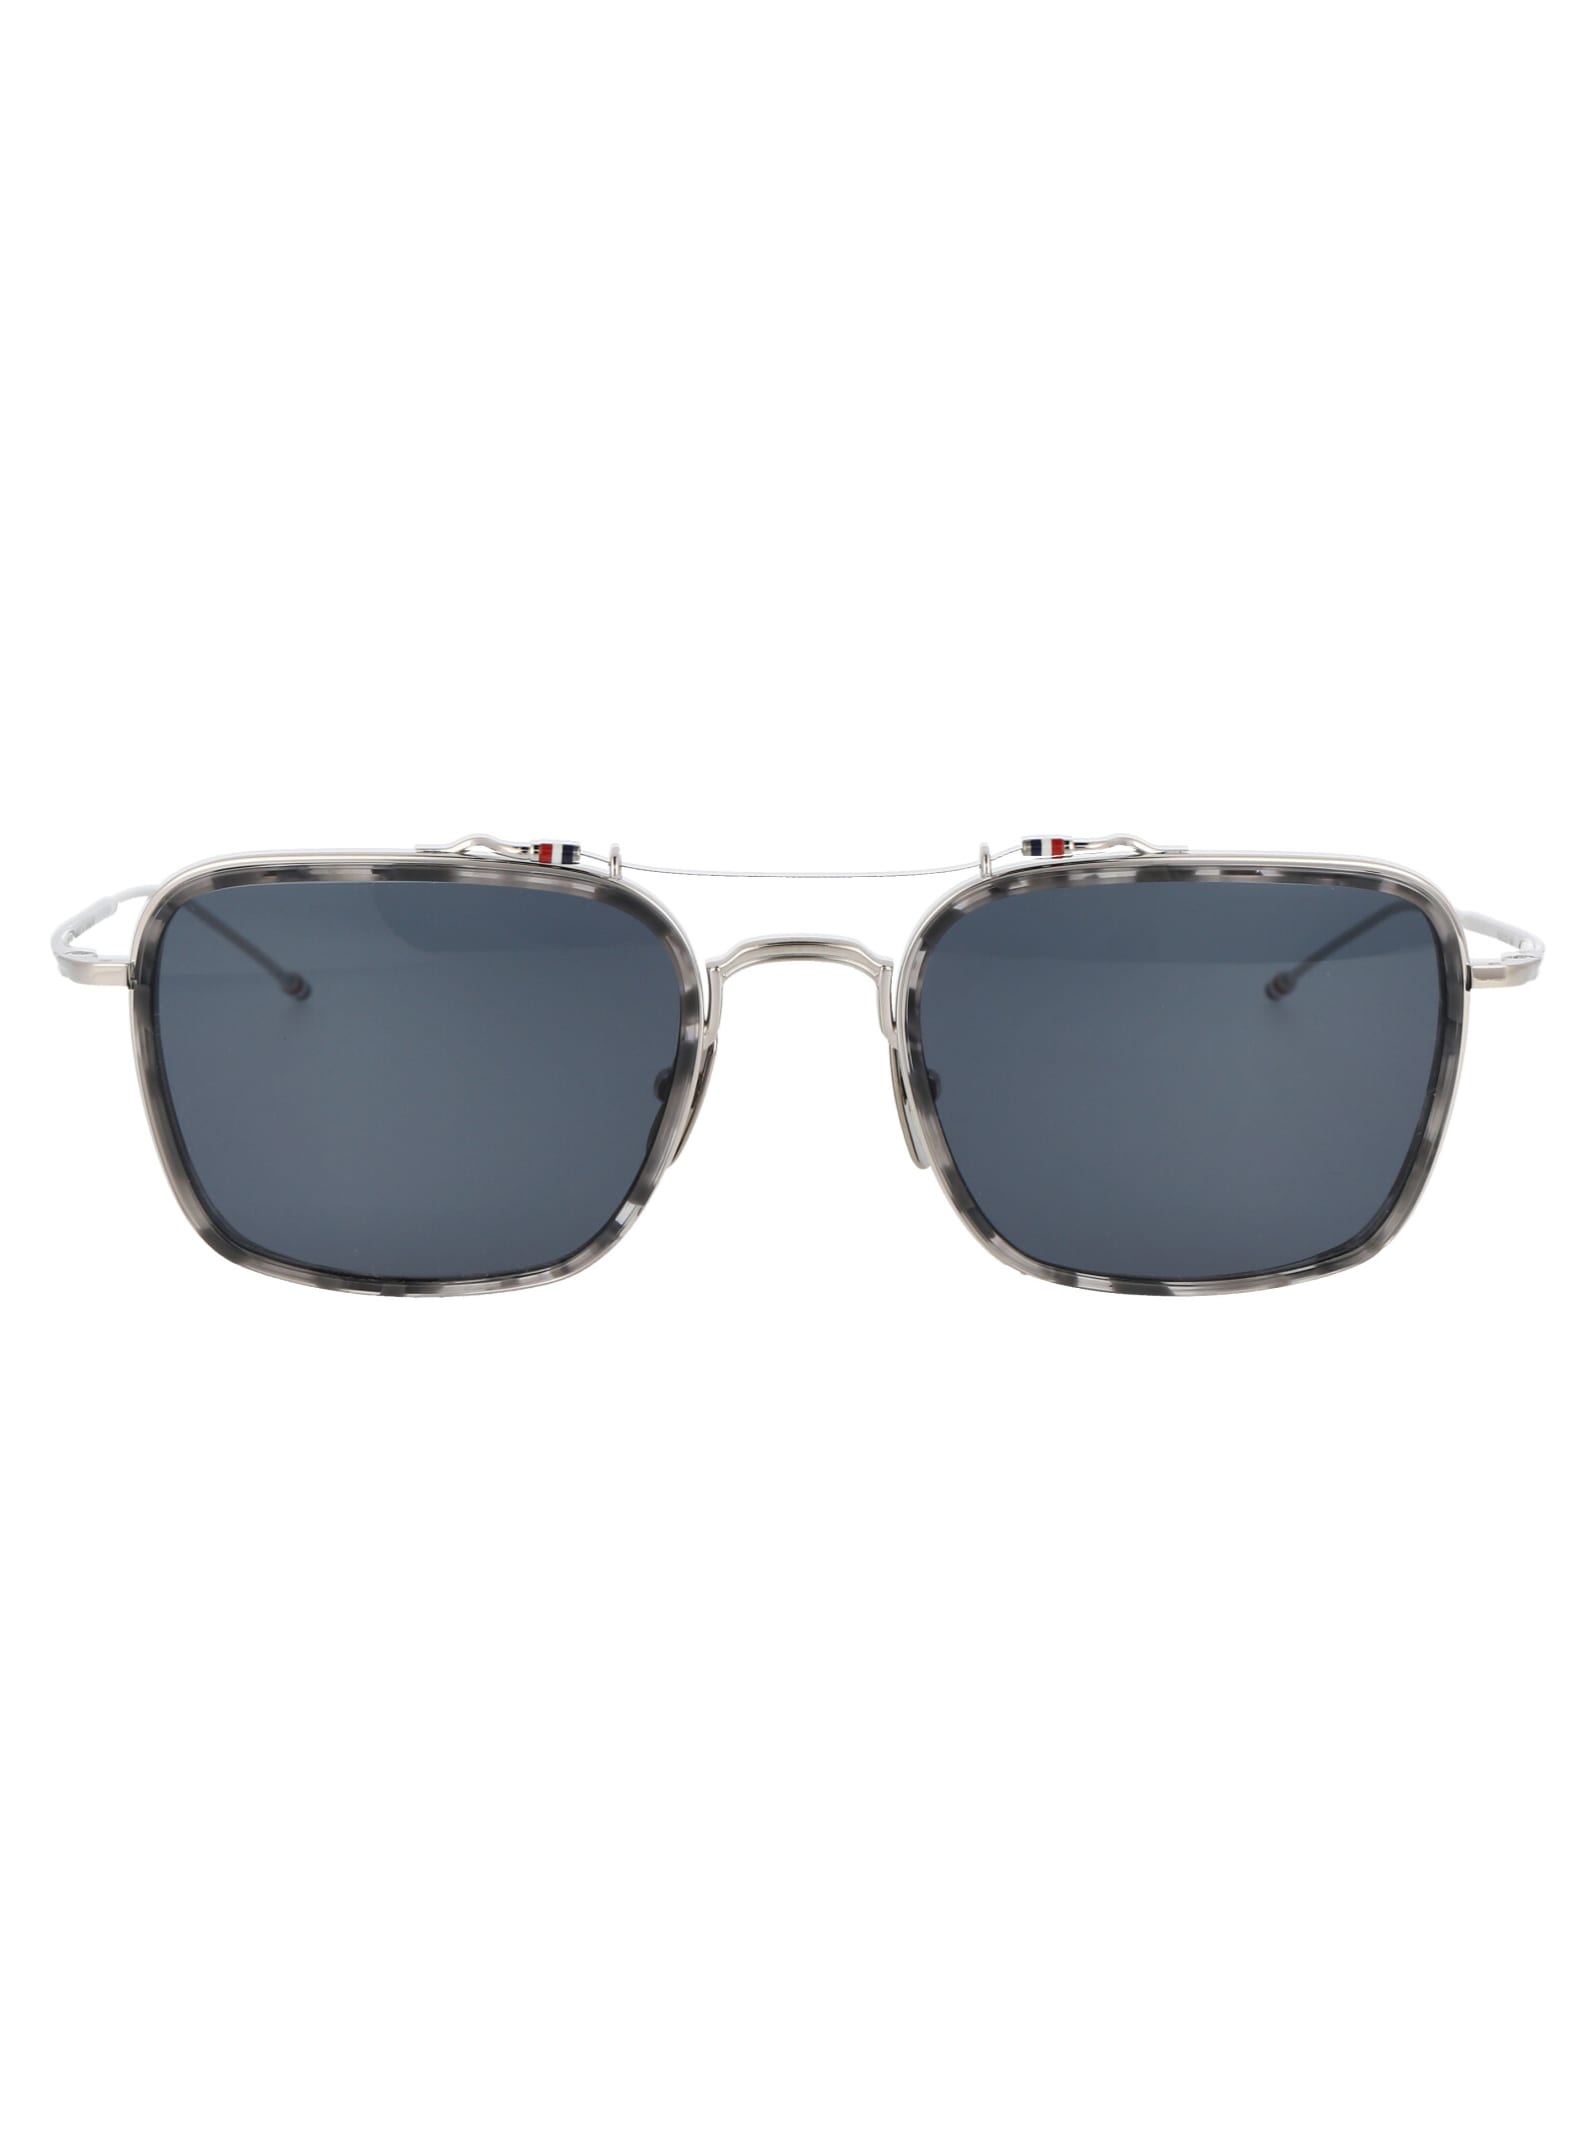 Thom Browne Tb-816 Sunglasses